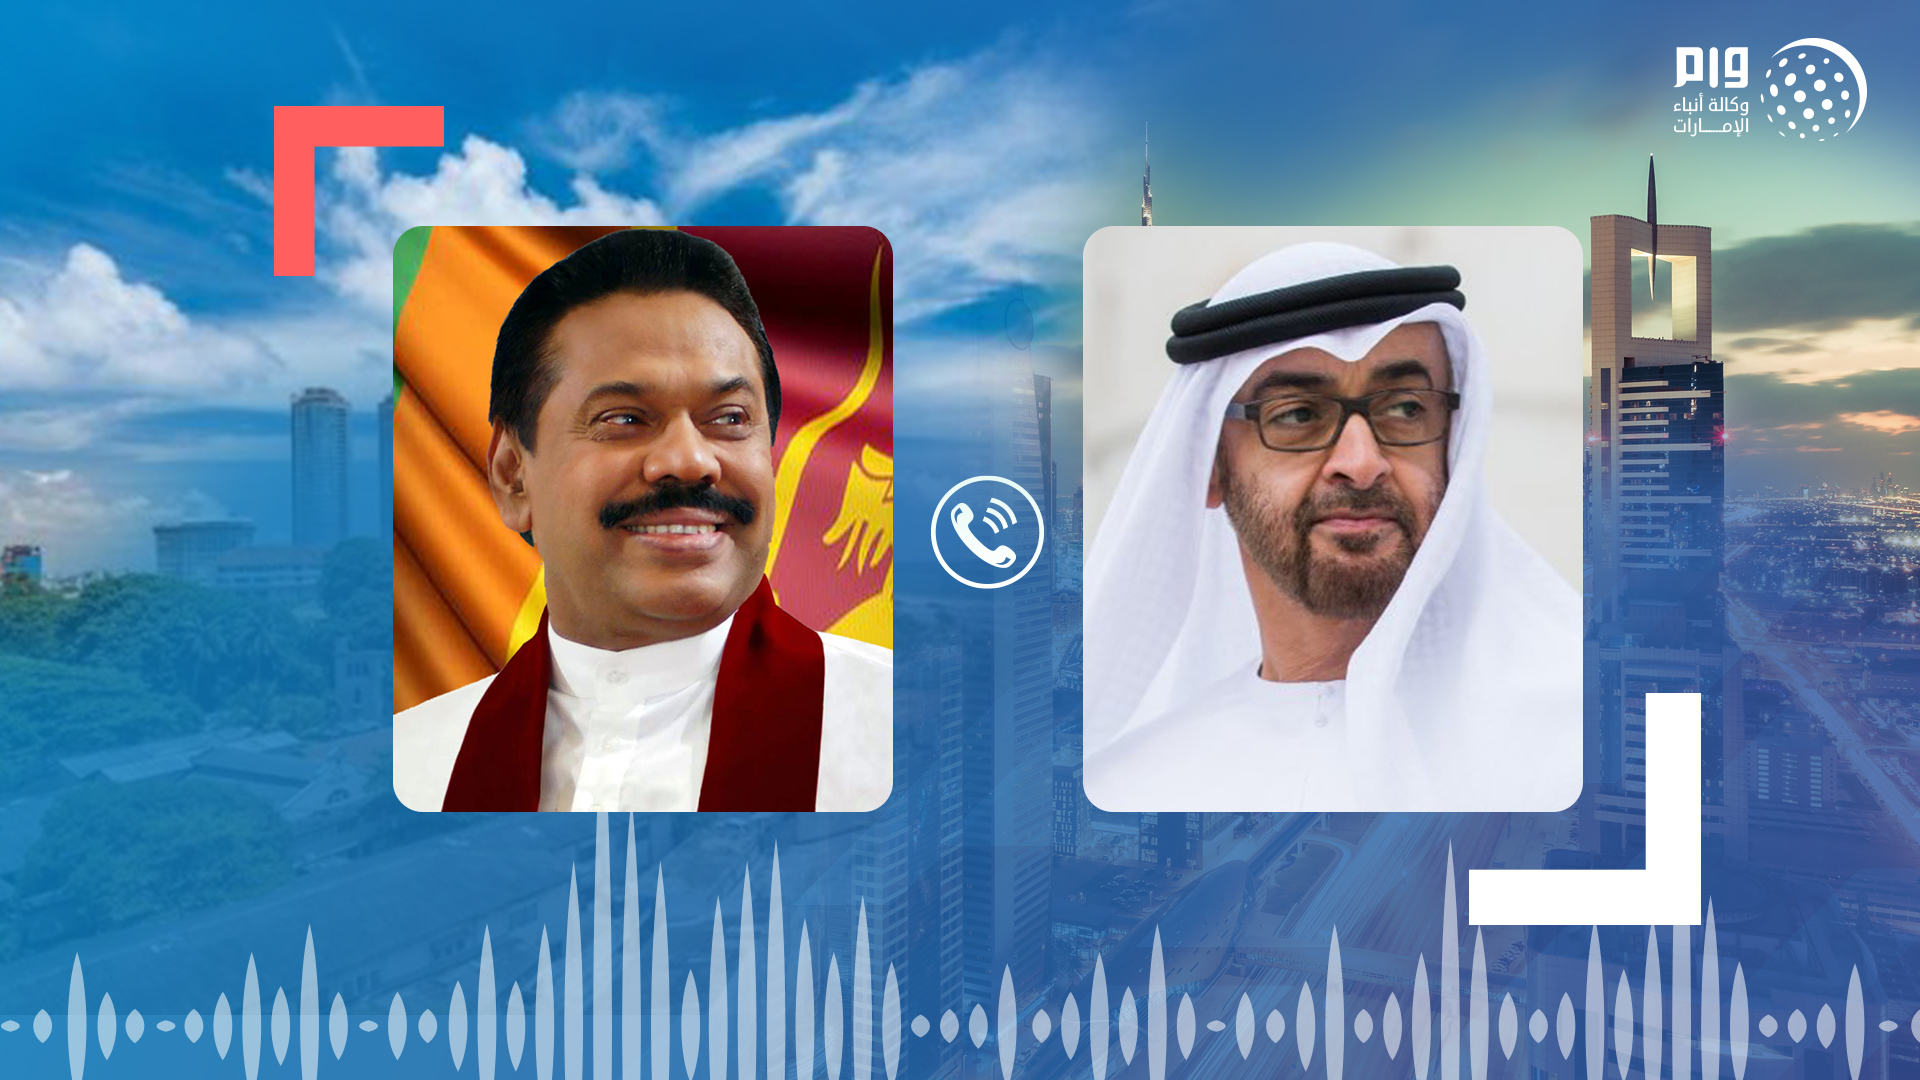 UAE’s Mohamed Bin Zayed Receives Phone Call From Sri Lankan PM